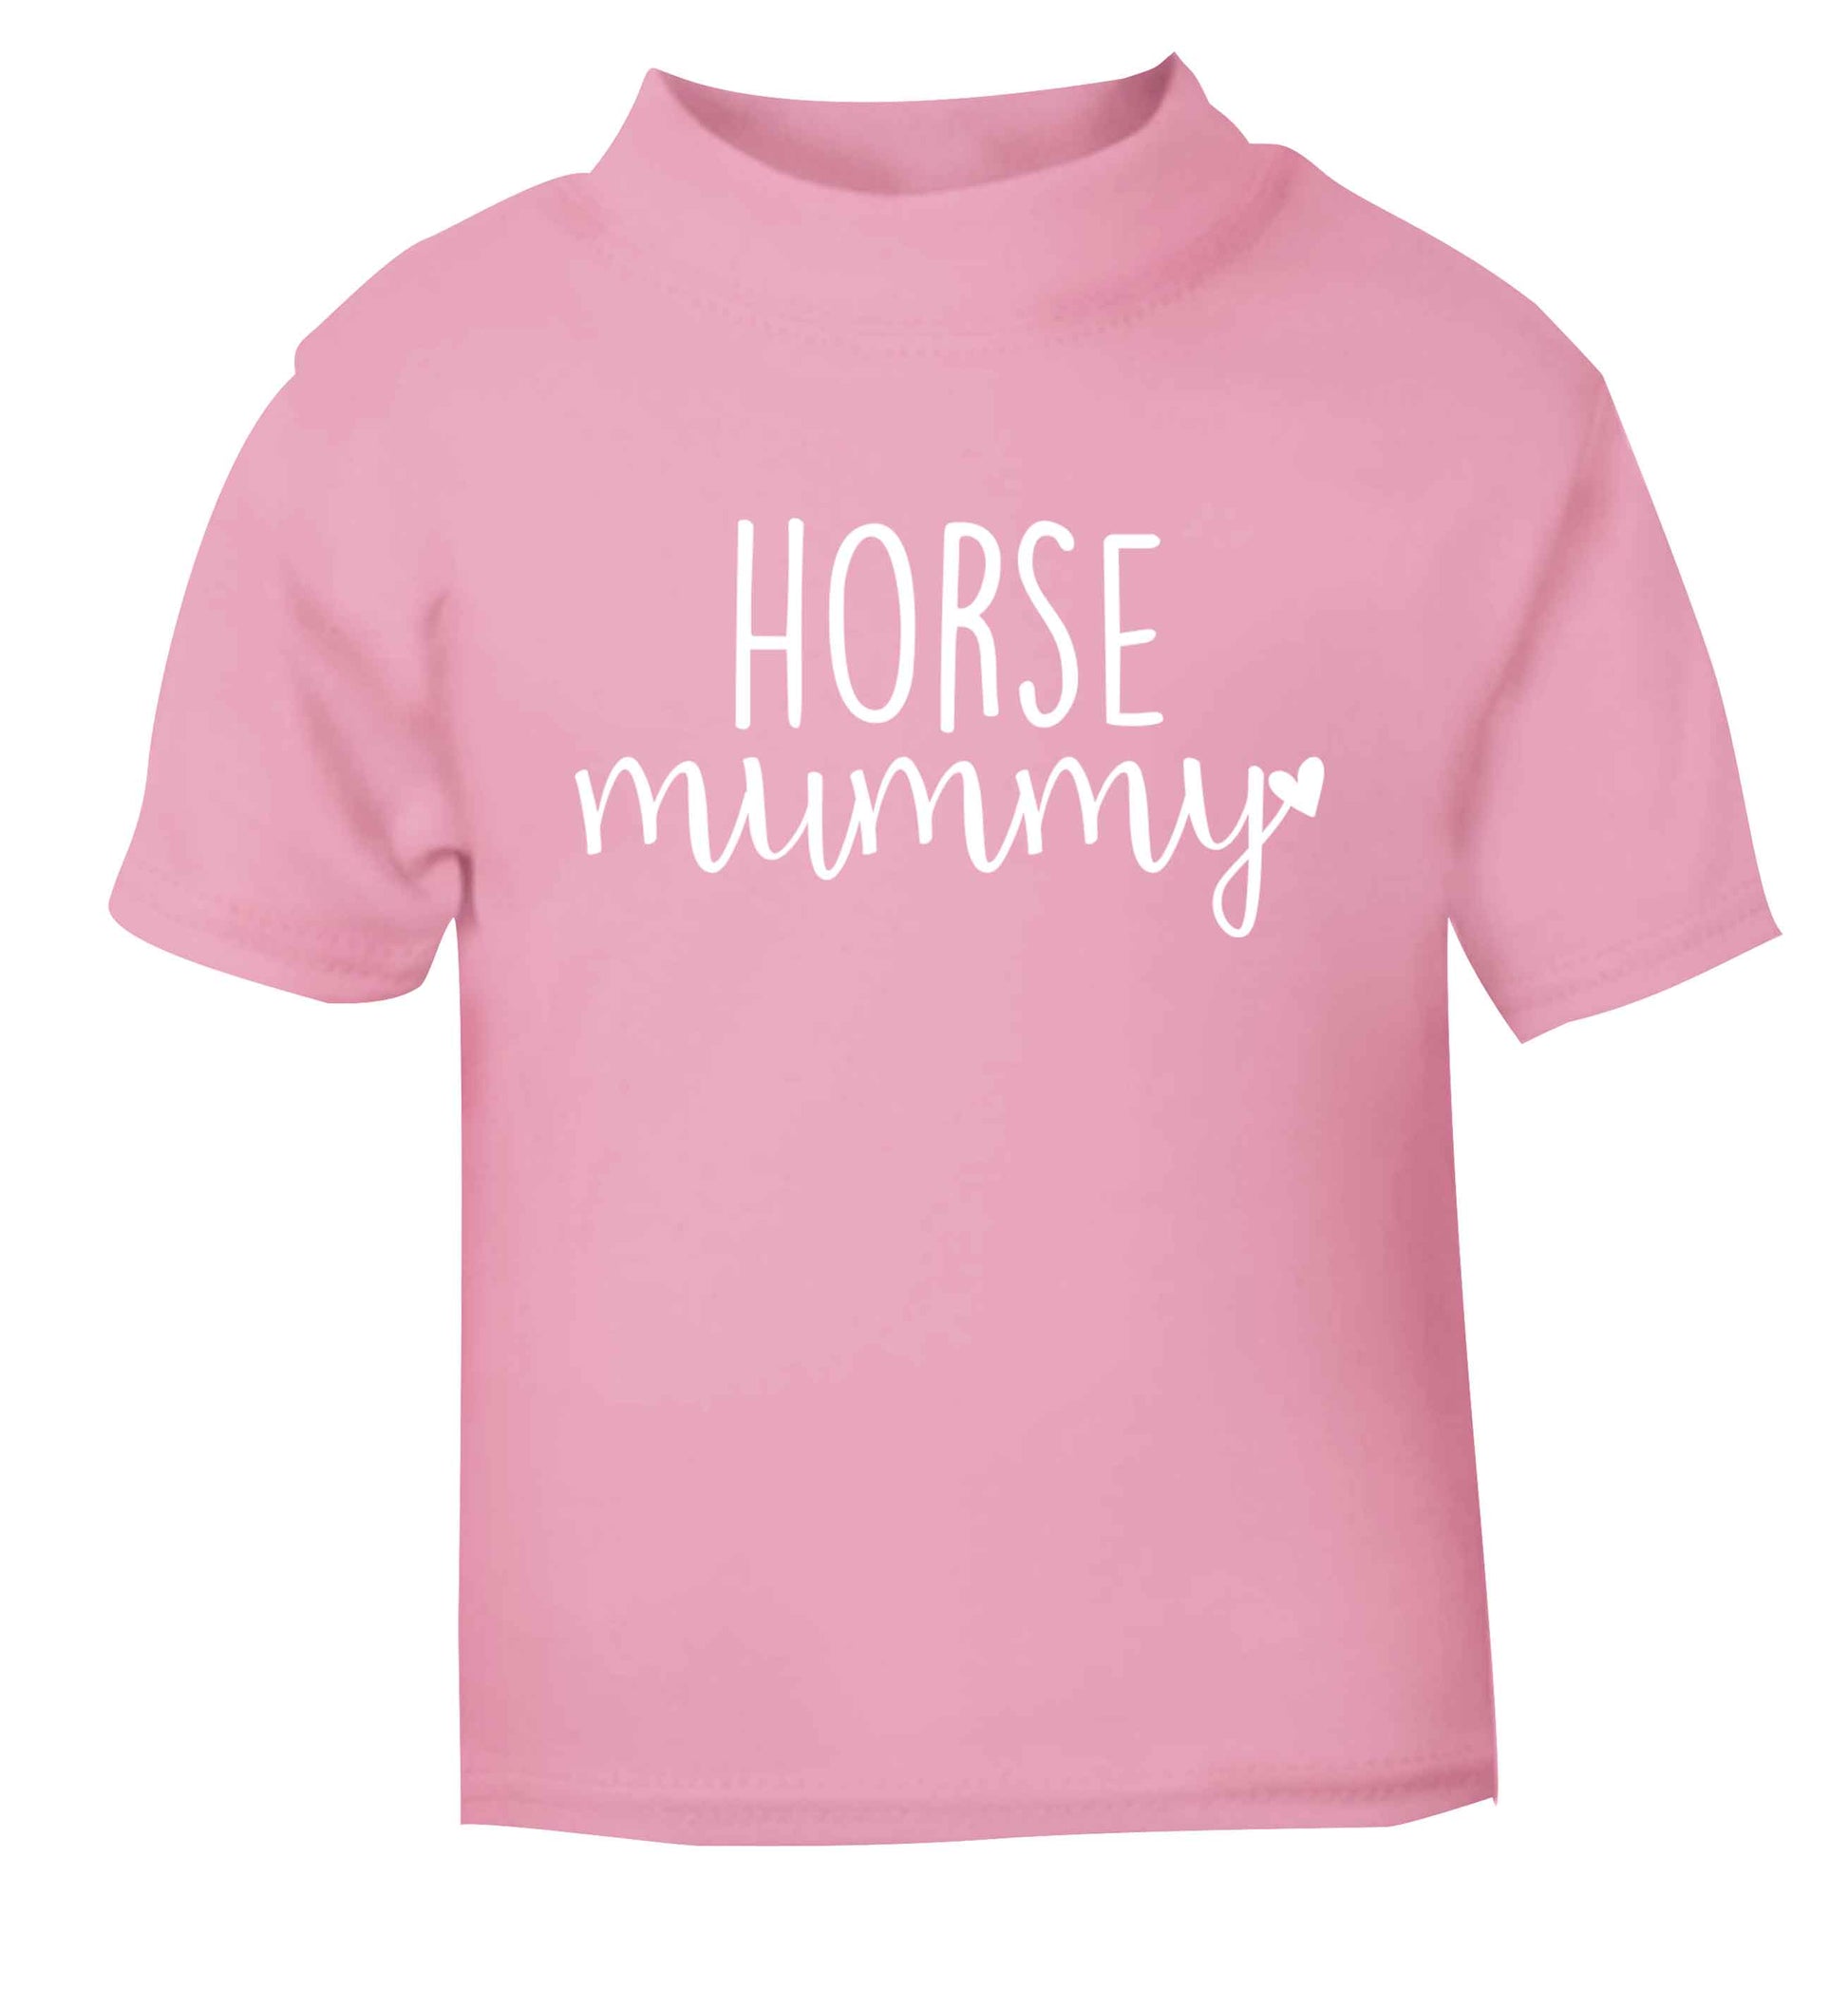 Horse mummy light pink baby toddler Tshirt 2 Years